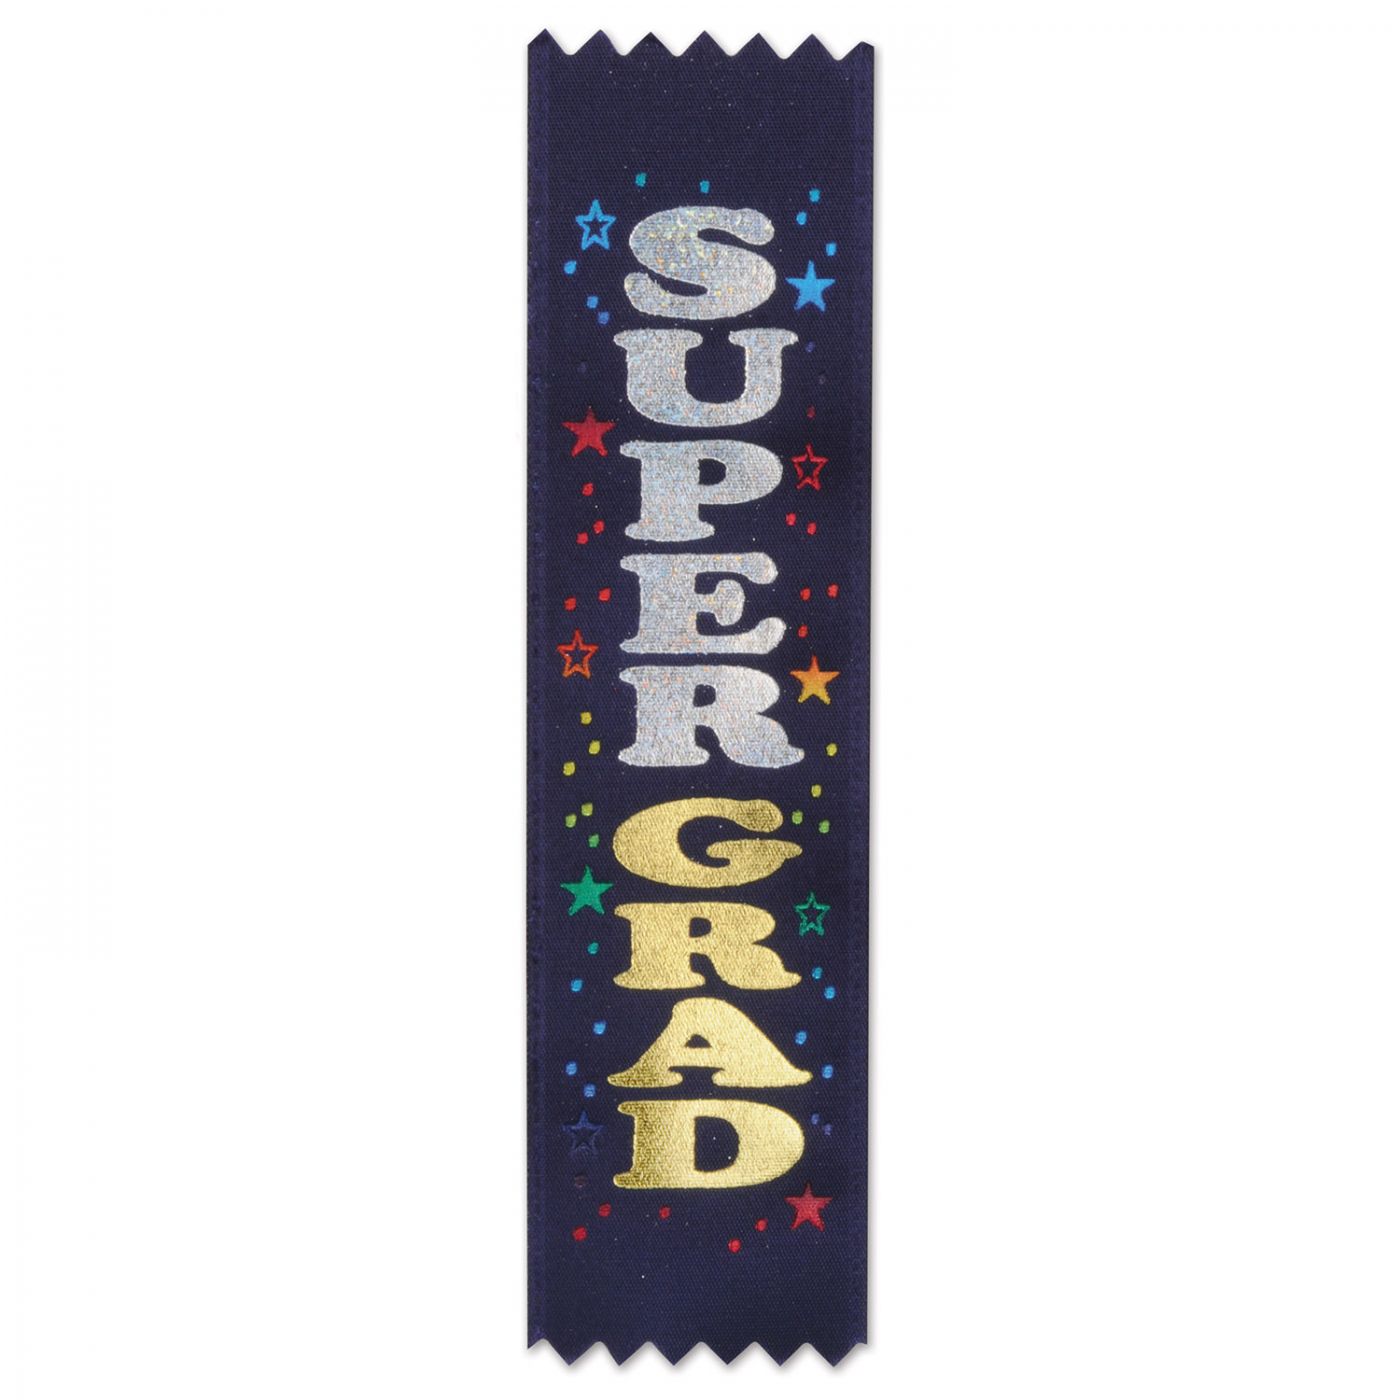 Super Grad Value Pack Ribbons (3) image